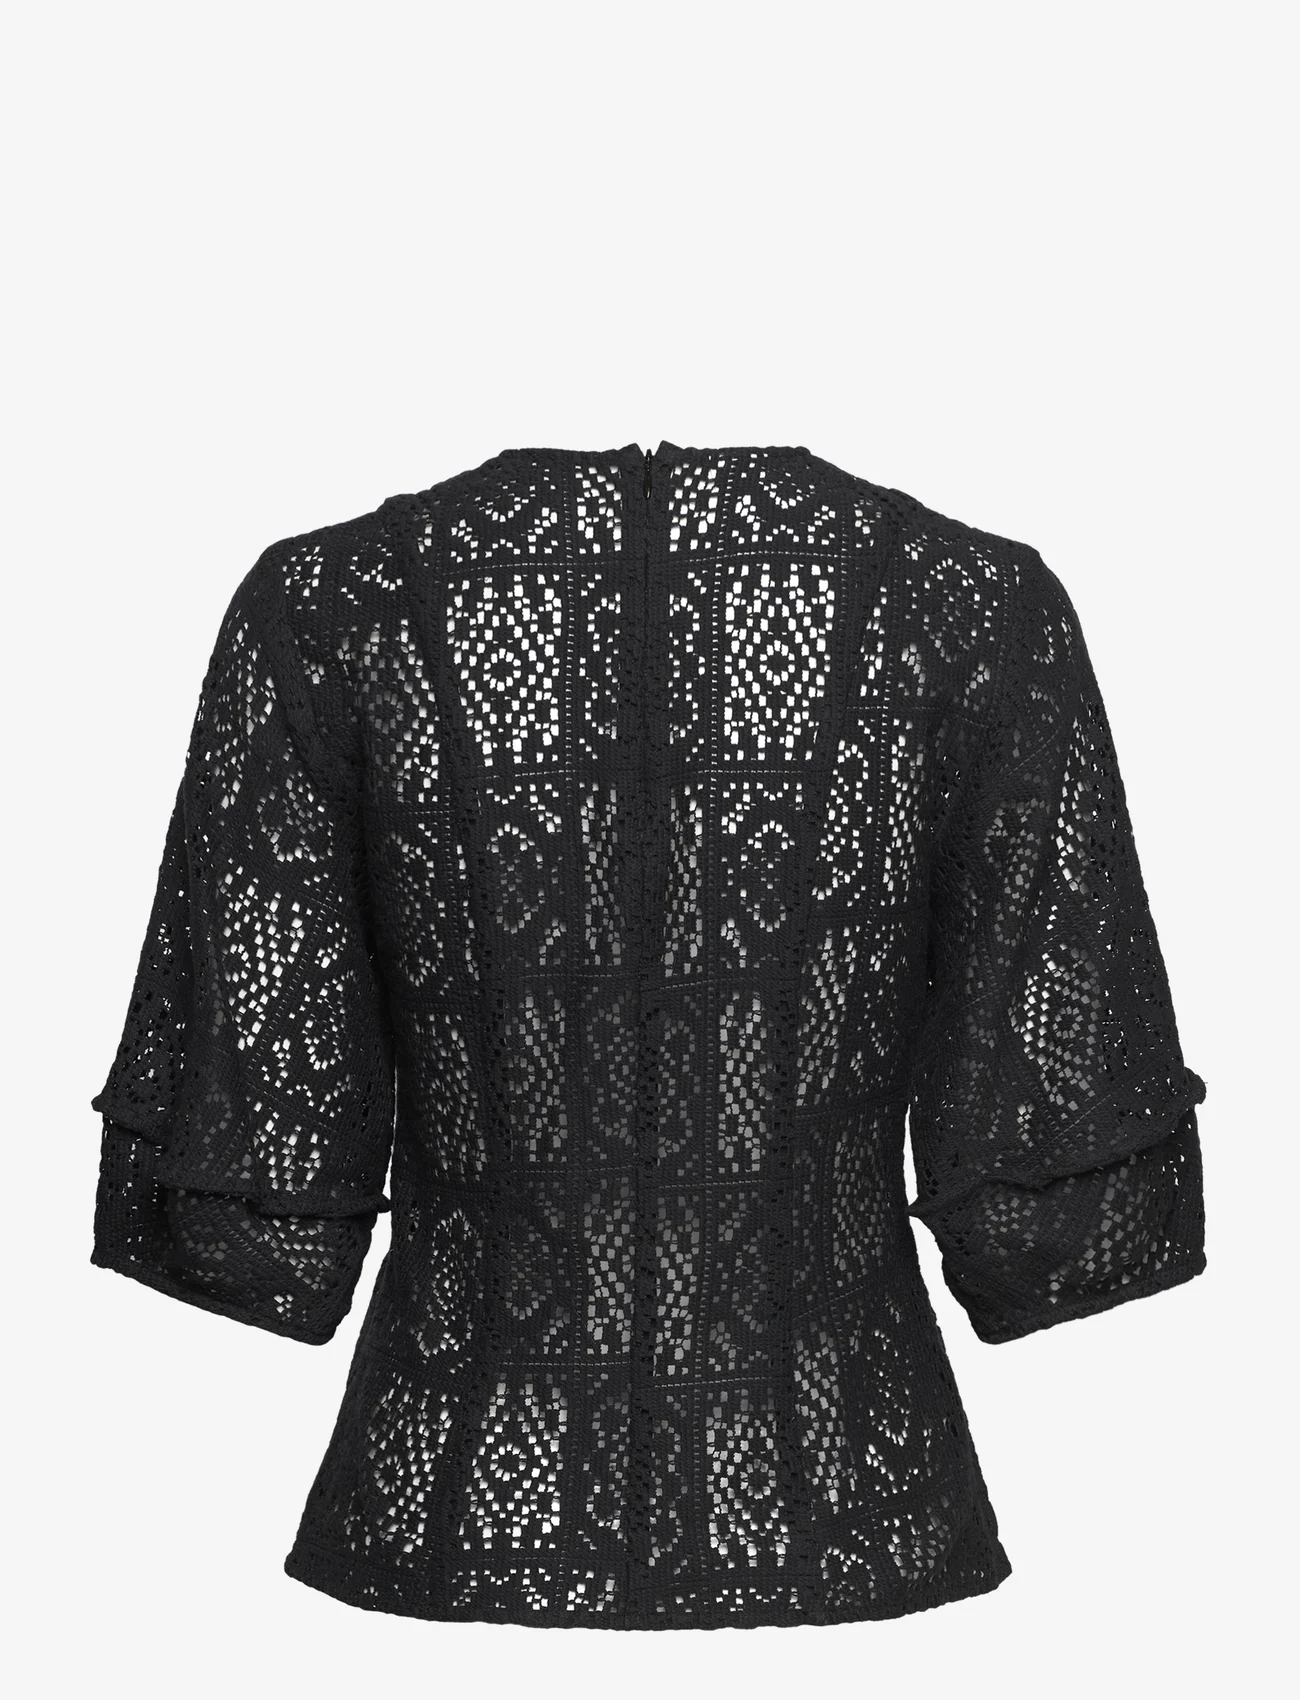 Day Birger et Mikkelsen - Cordelia - Cotton Crochet Lace - short-sleeved blouses - black - 1